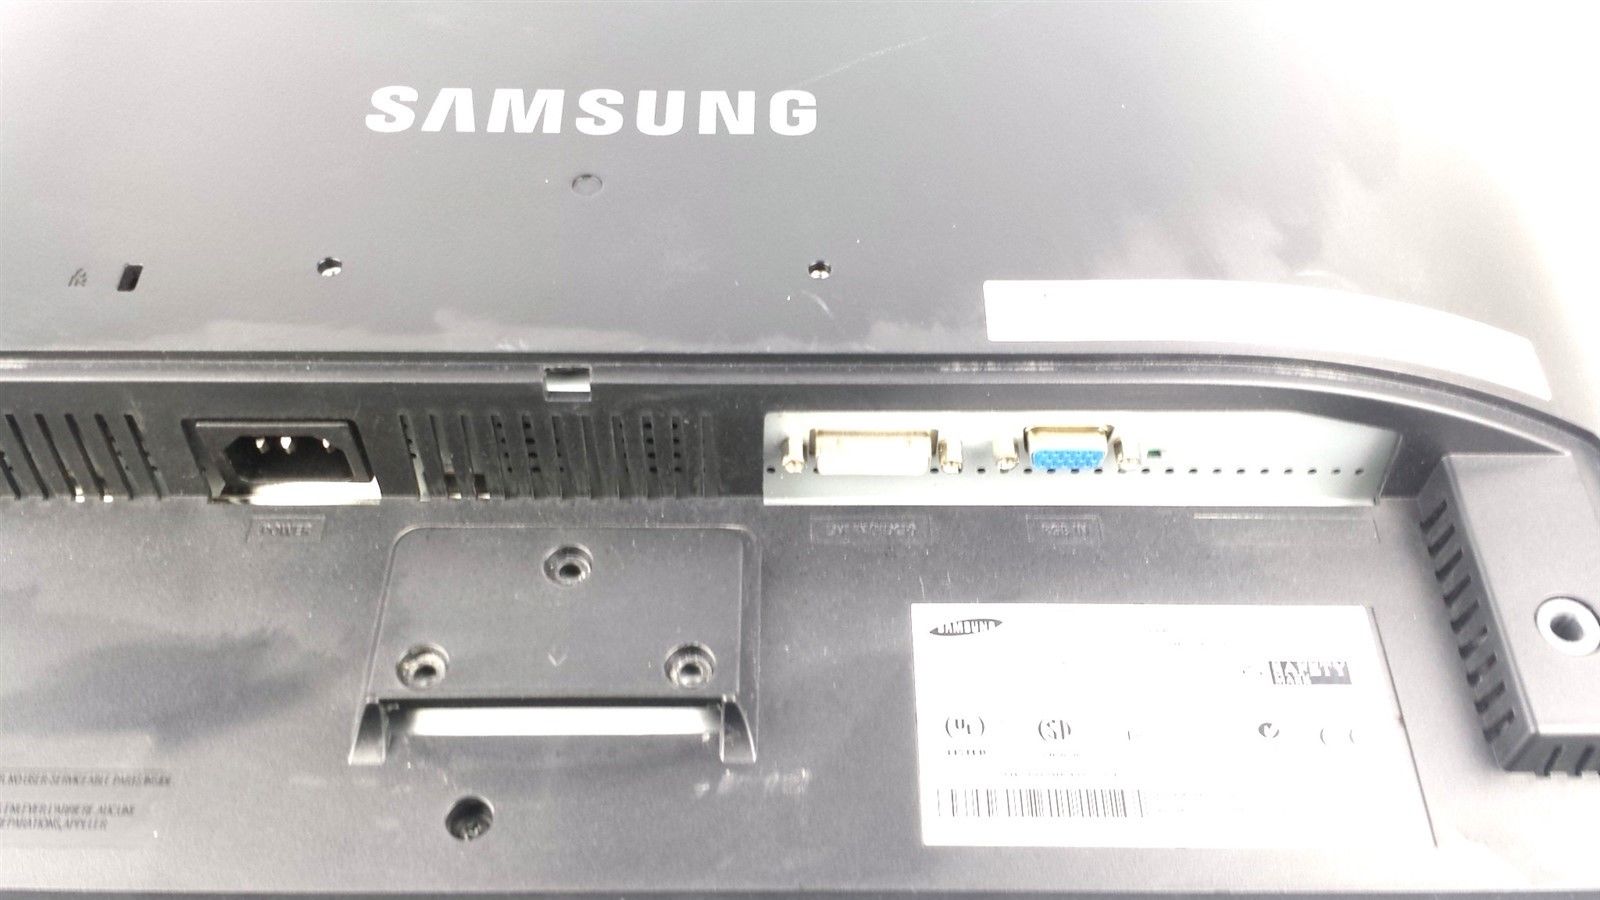 Samsung SyncMaster 206BW Widescreen LCD Computer Monitor 20" w/ Power & VGA Cord